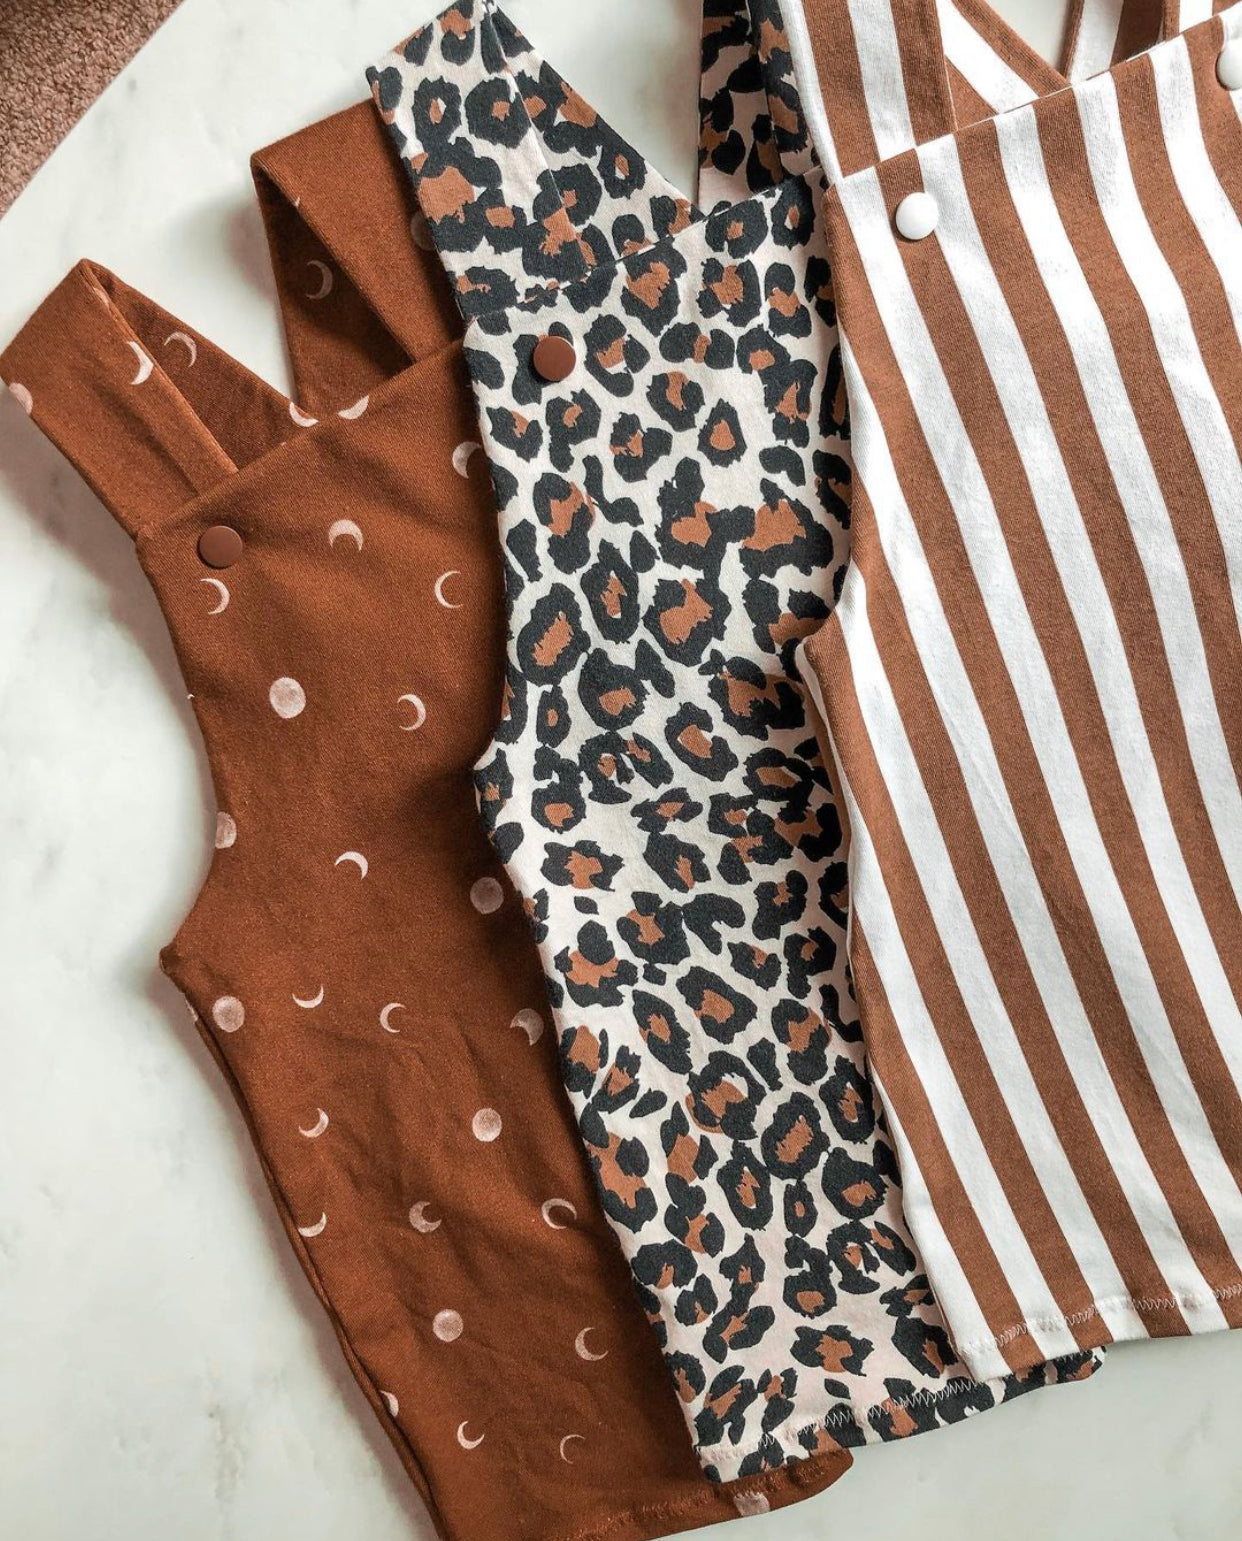 Leopard overalls